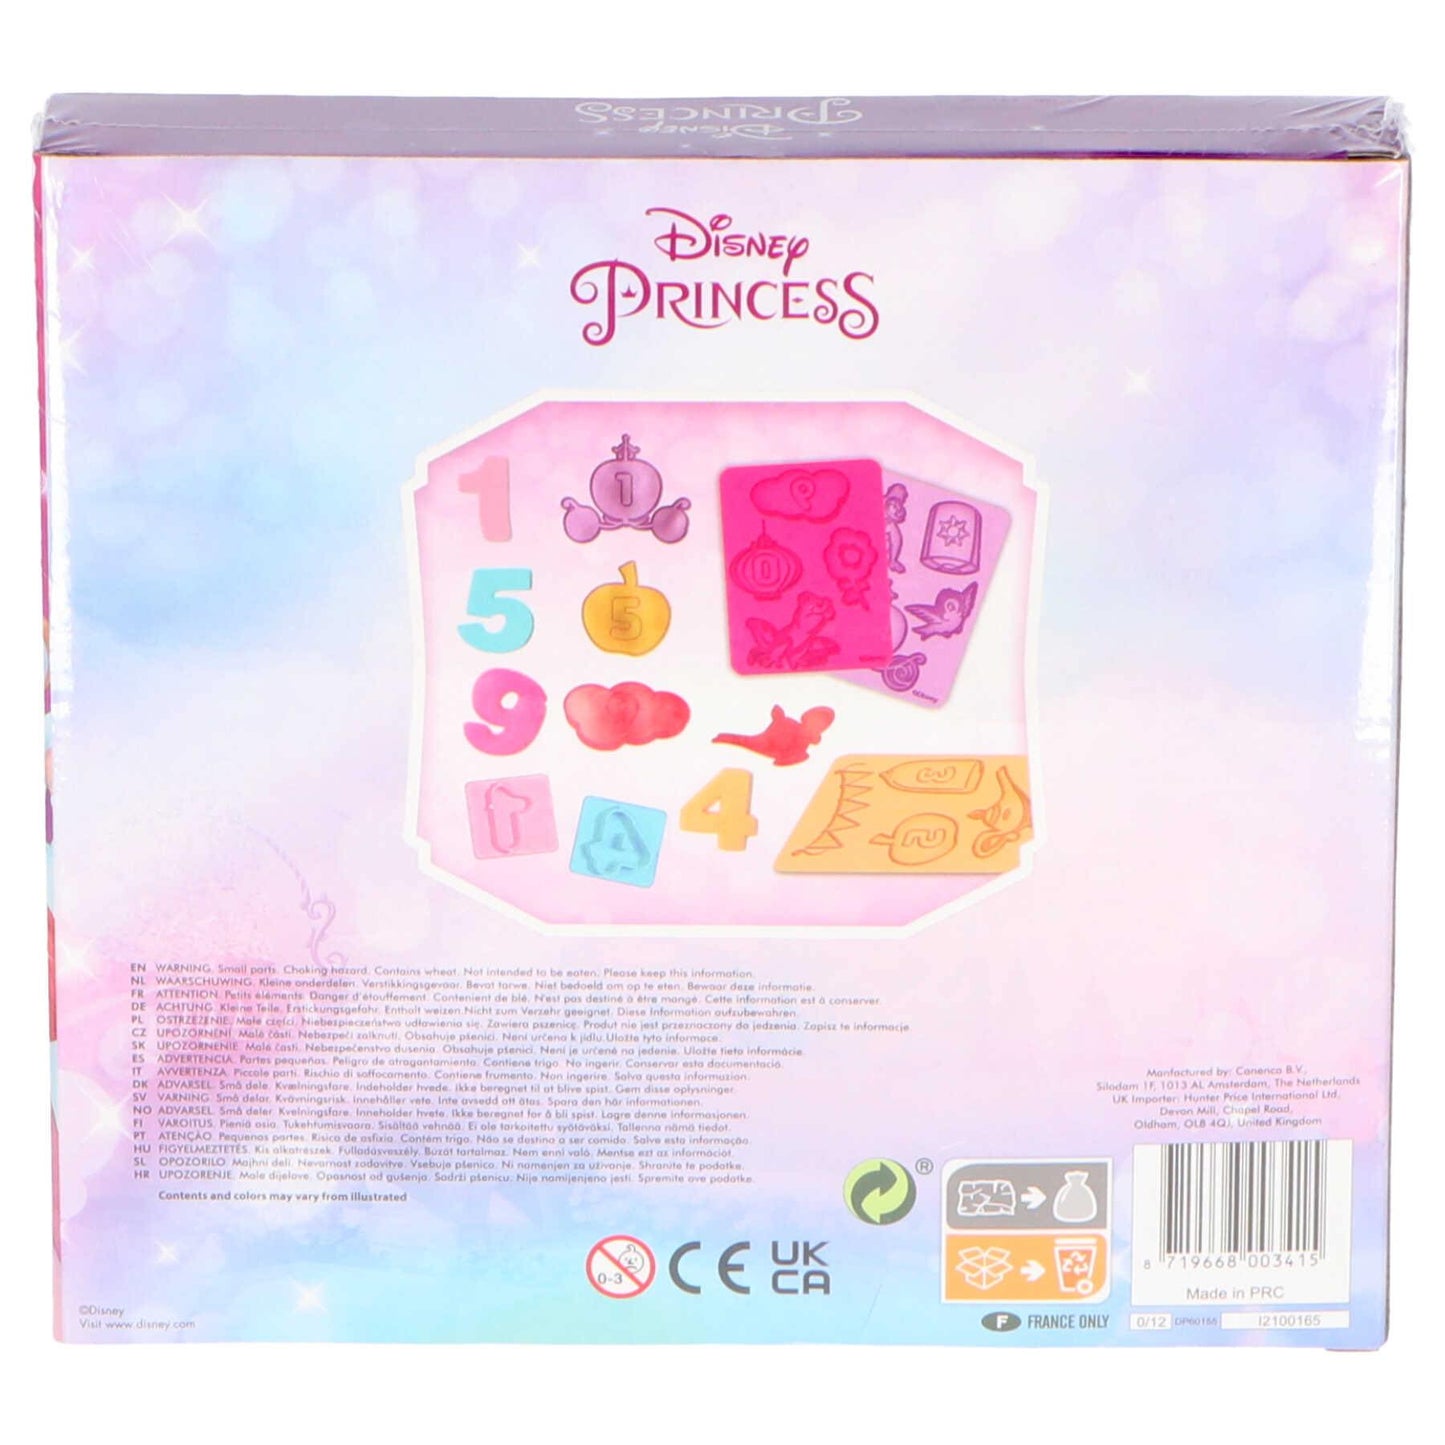 Princess Disney Okidoki Dough Shapes + Numbers